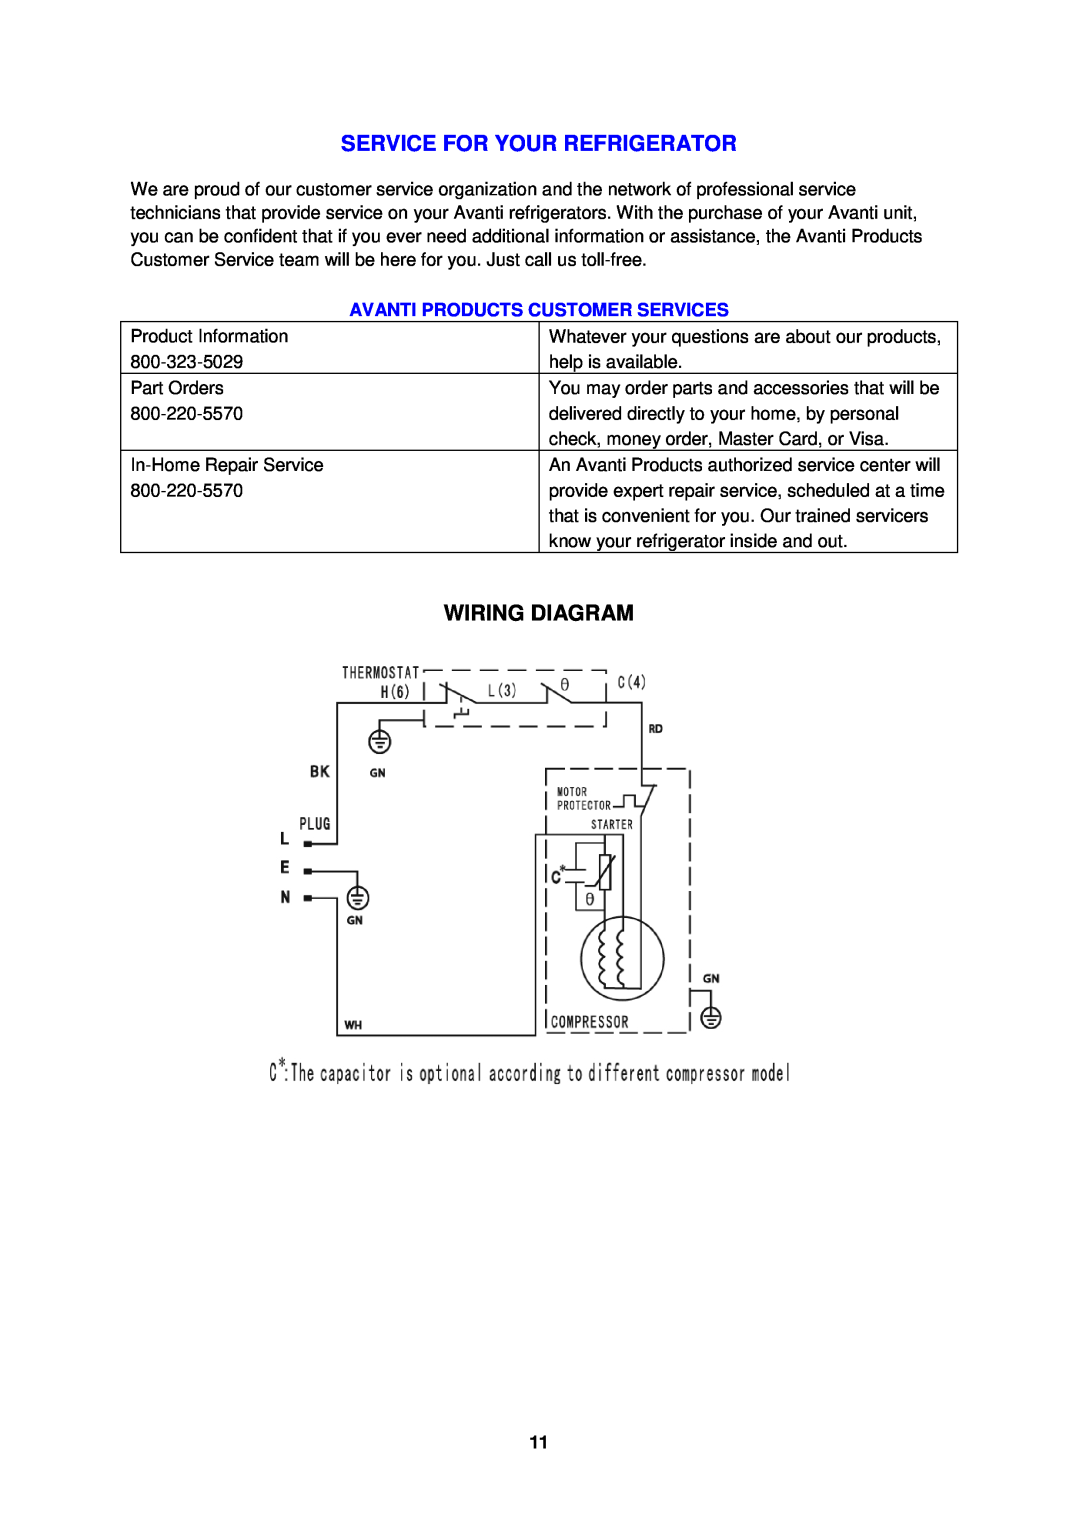 Avanti AR323SB, AR321BB instruction manual Service For Your Refrigerator, Wiring Diagram, Avanti Products Customer Services 